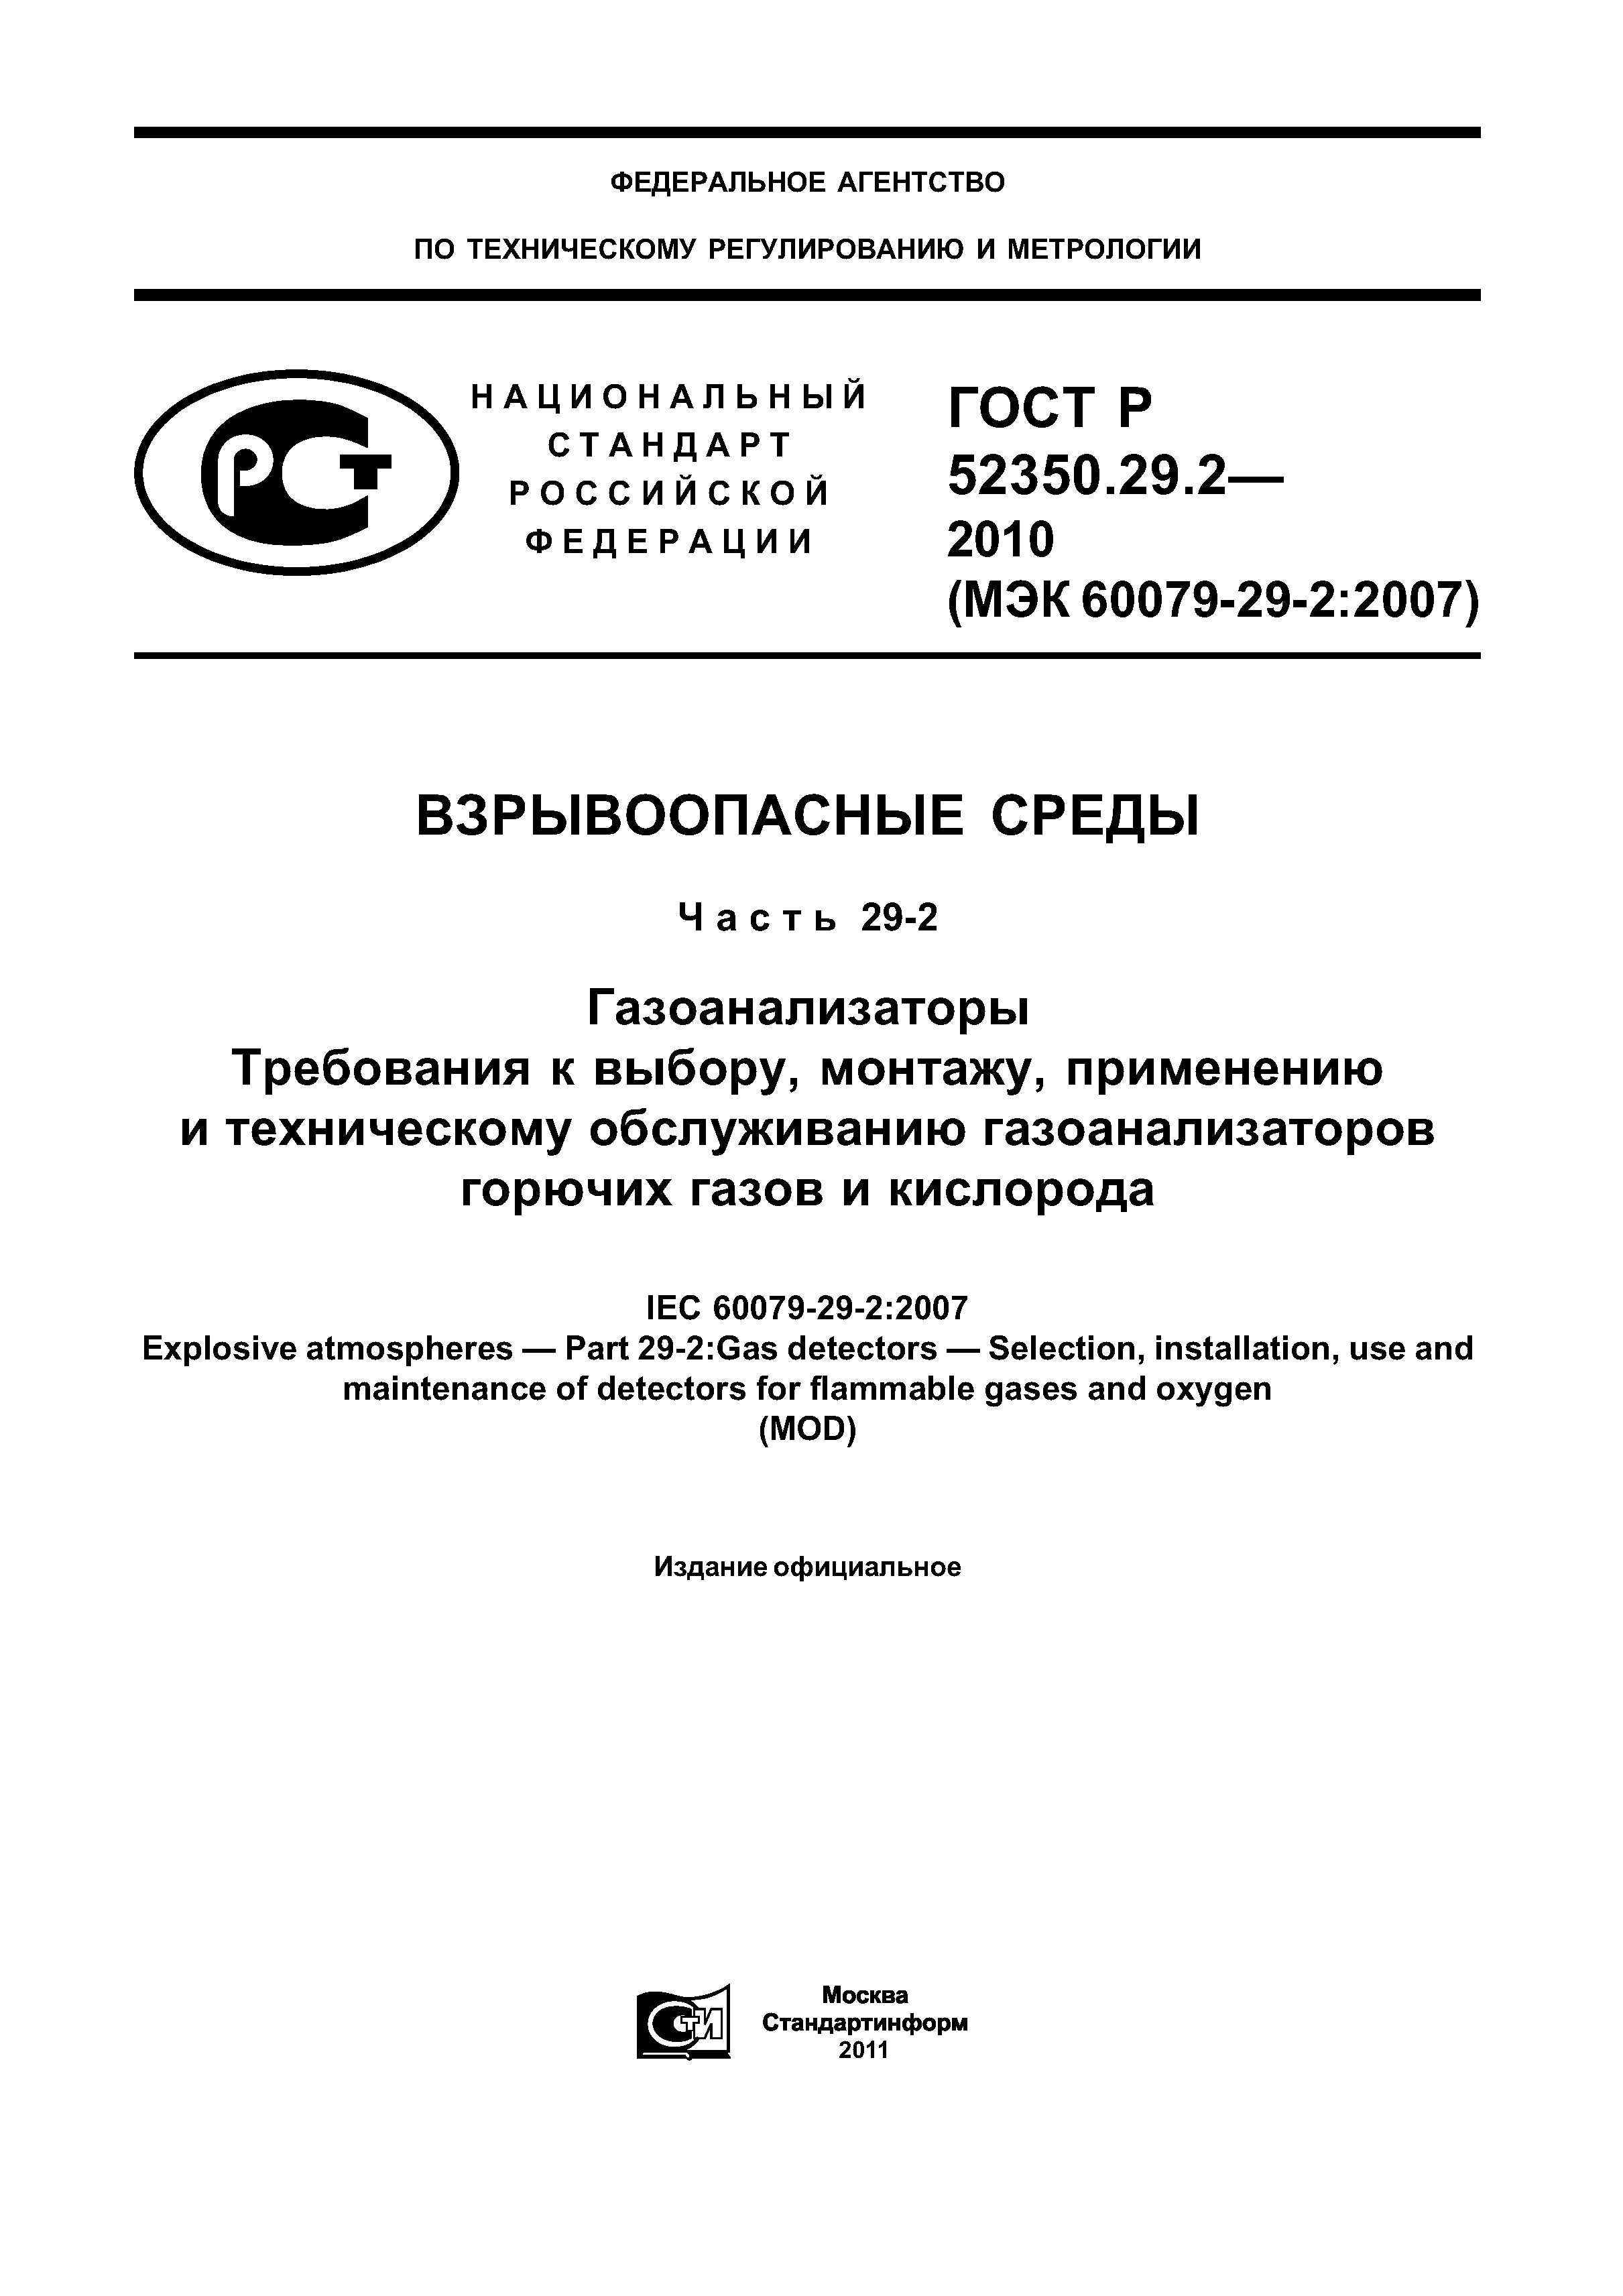 ГОСТ Р 52350.29.2-2010